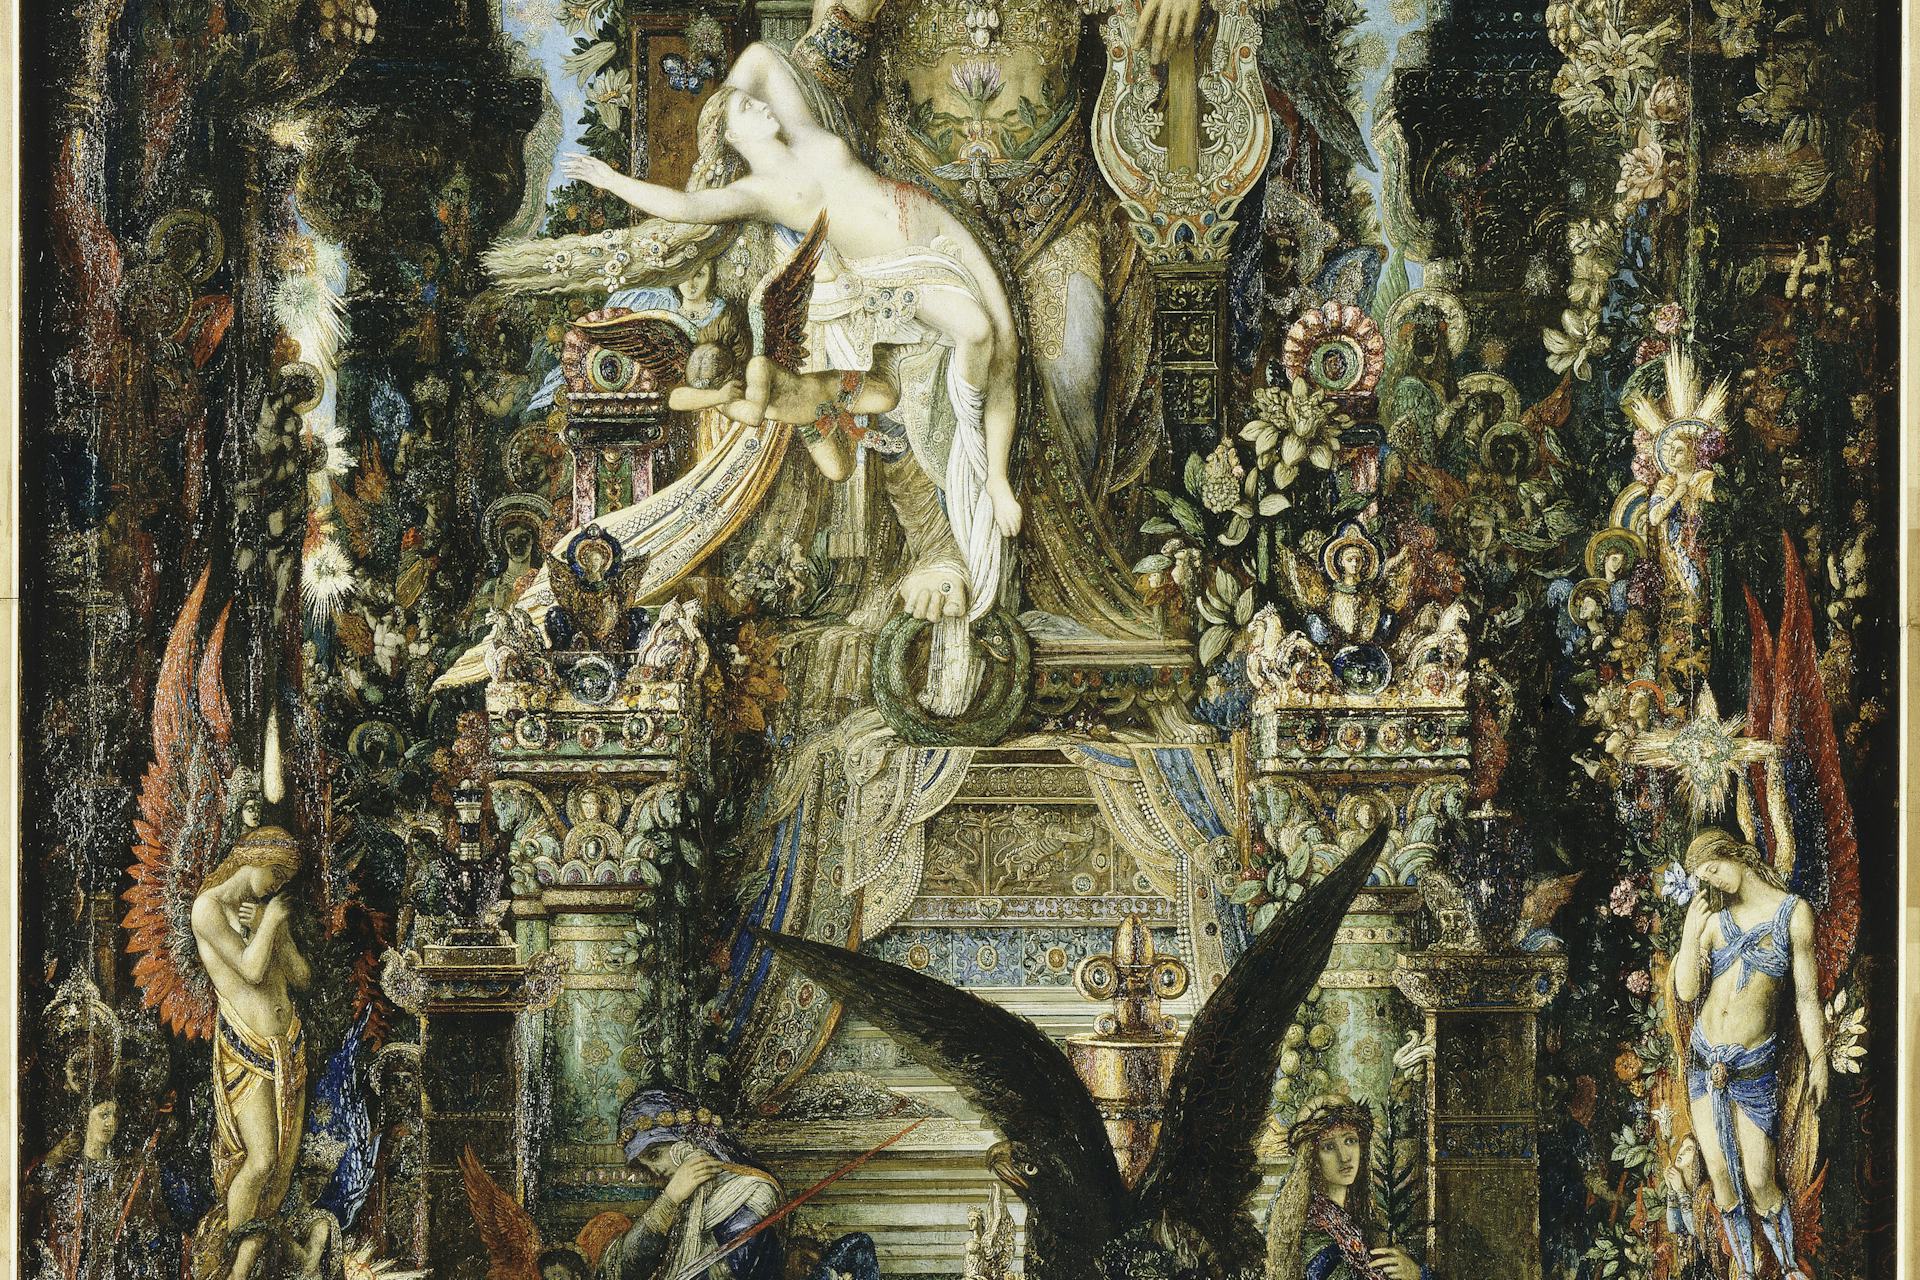 Jupiter and Semele by Gustave Moreau